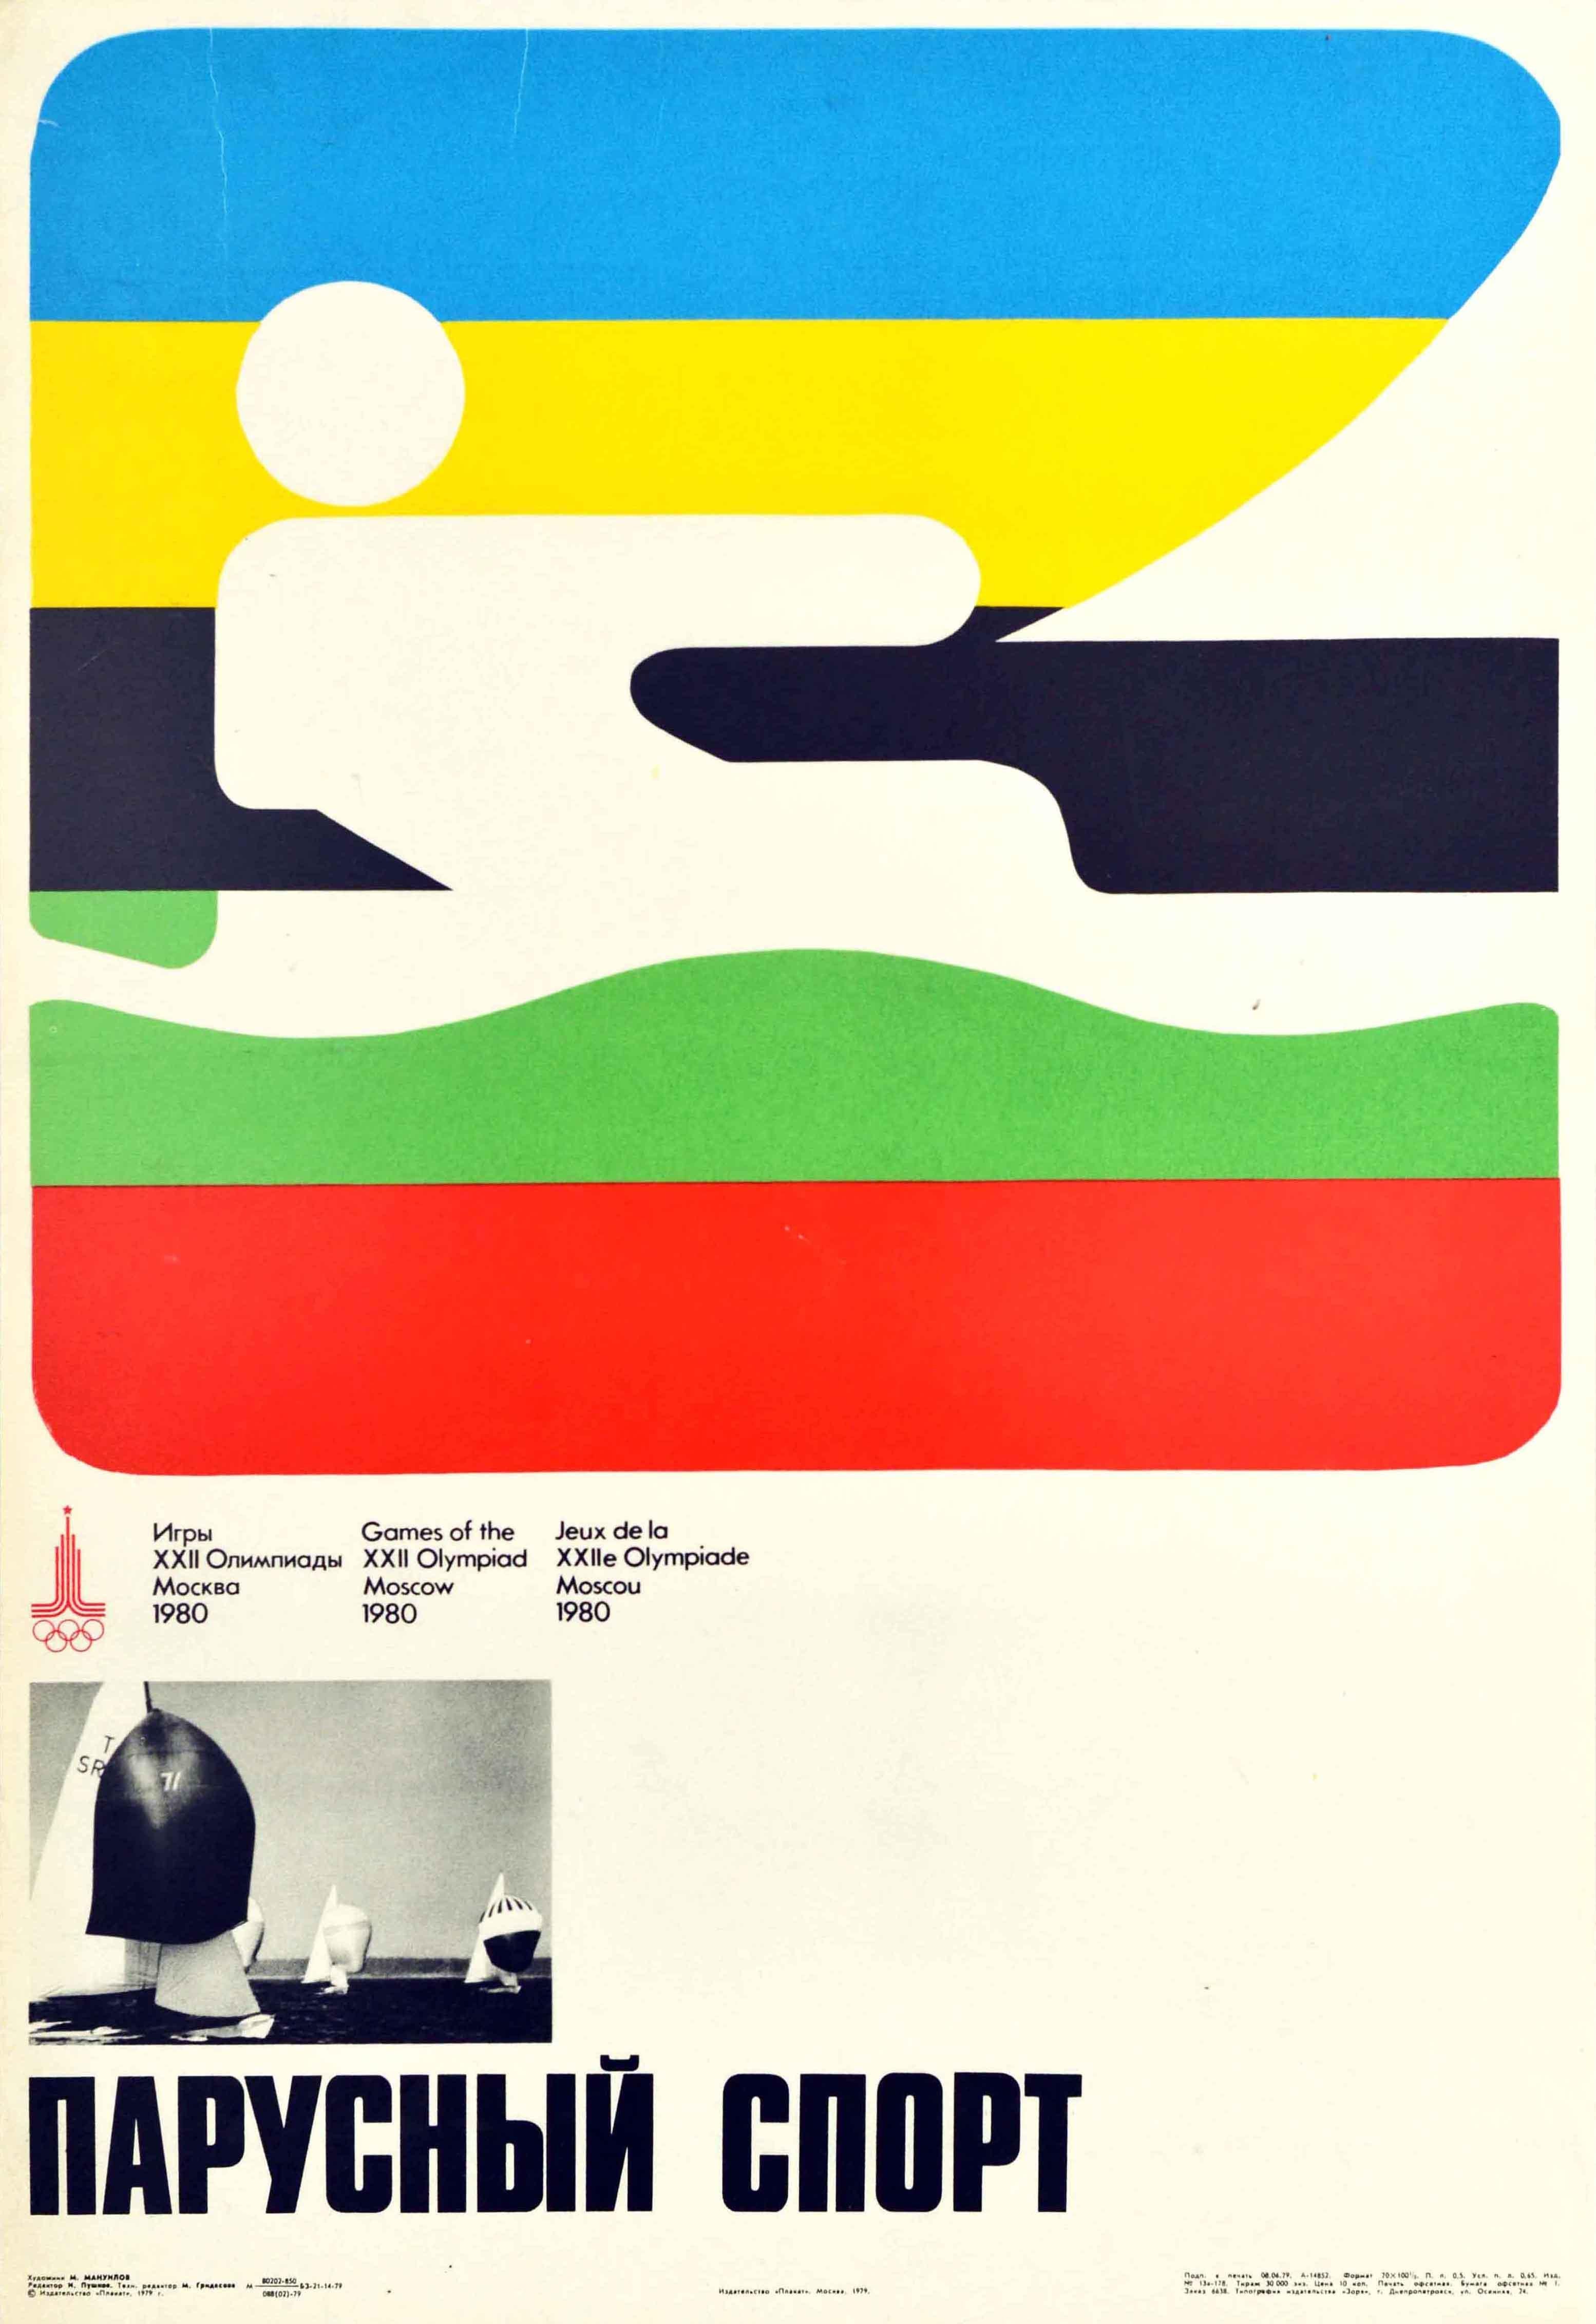 Manuilov Print - Original Vintage Poster Moscow Olympics 1980 Sailing Sport Event Graphic Design